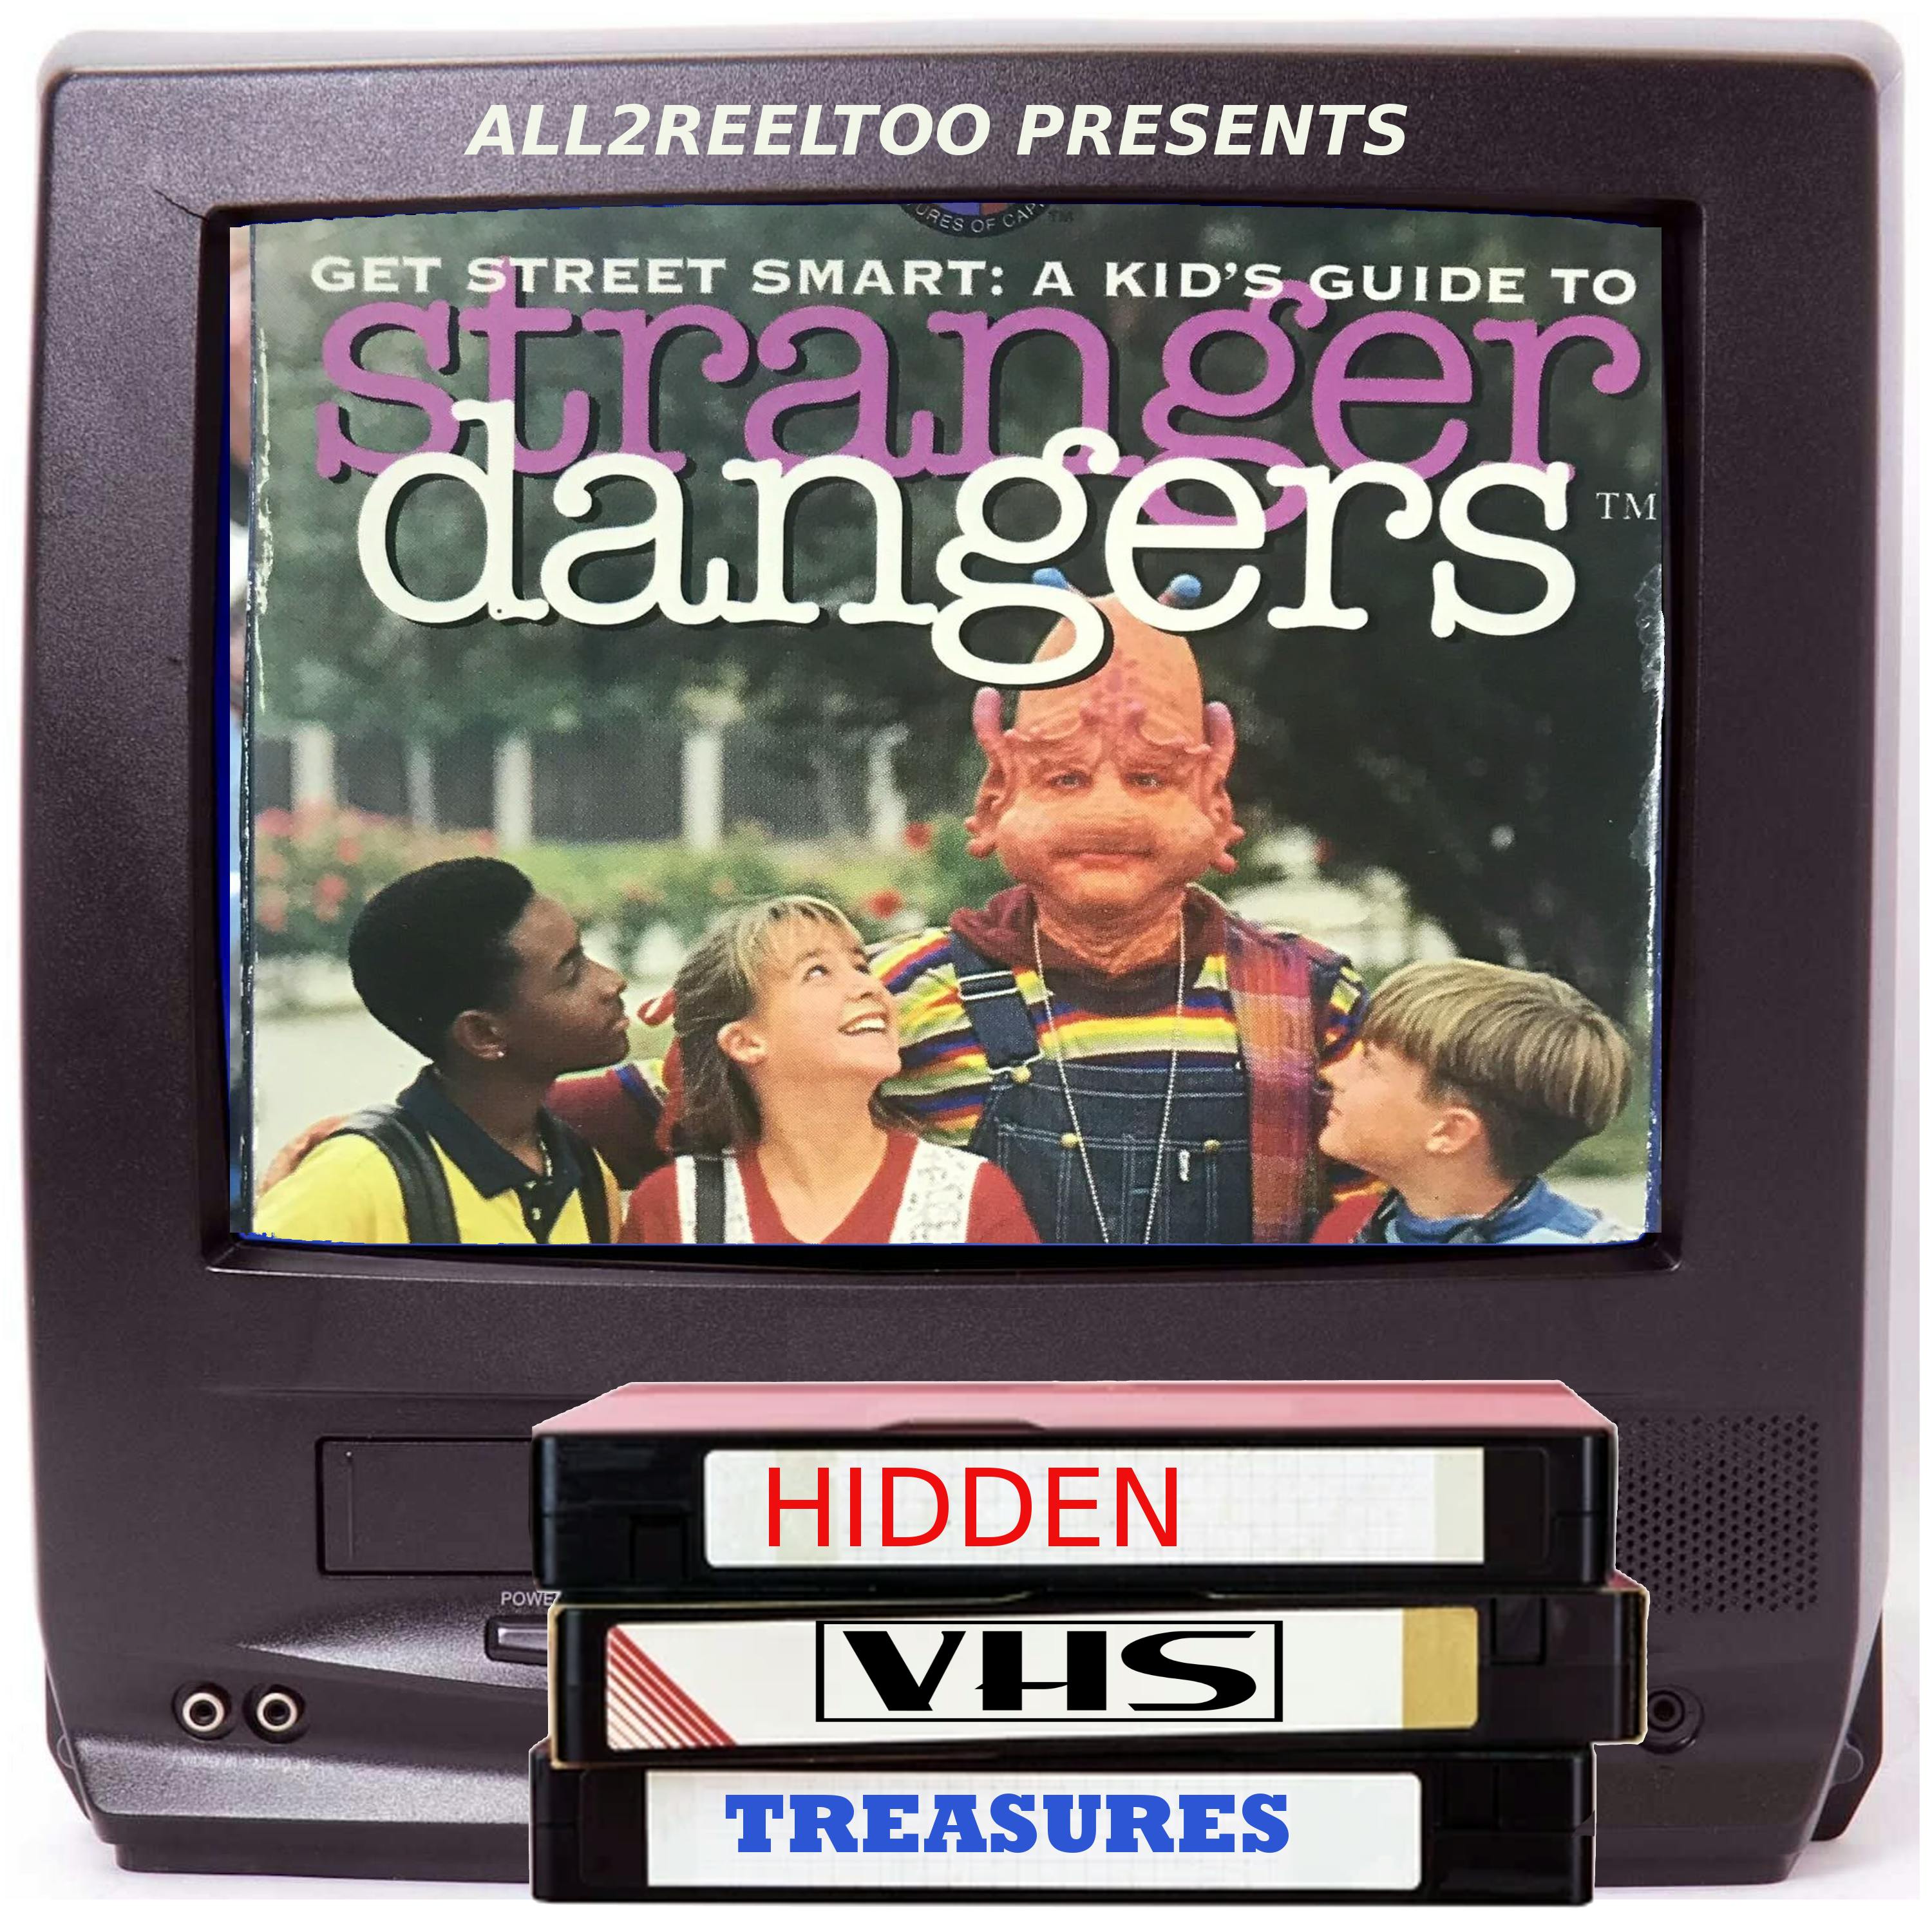 Get Street Smart: A Kid’s Guide To Stranger Dangers (1995) - HIDDEN VHS TREASURES